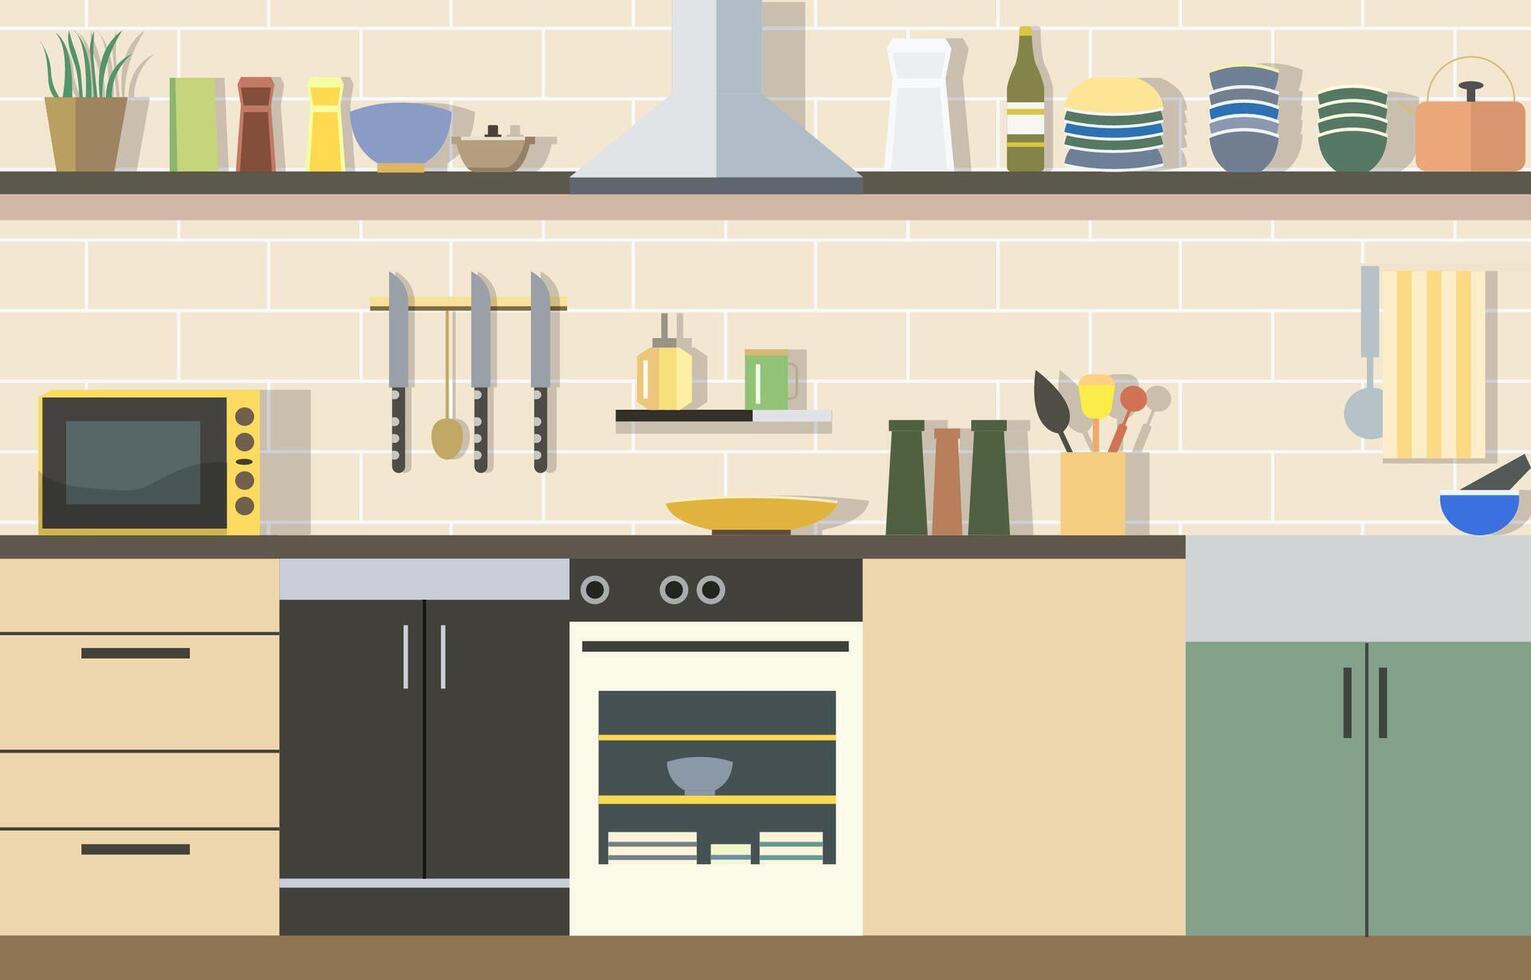 Flat Design of Kitchen in Restaurant with Kitchen Utensils and Storage Shelves vector